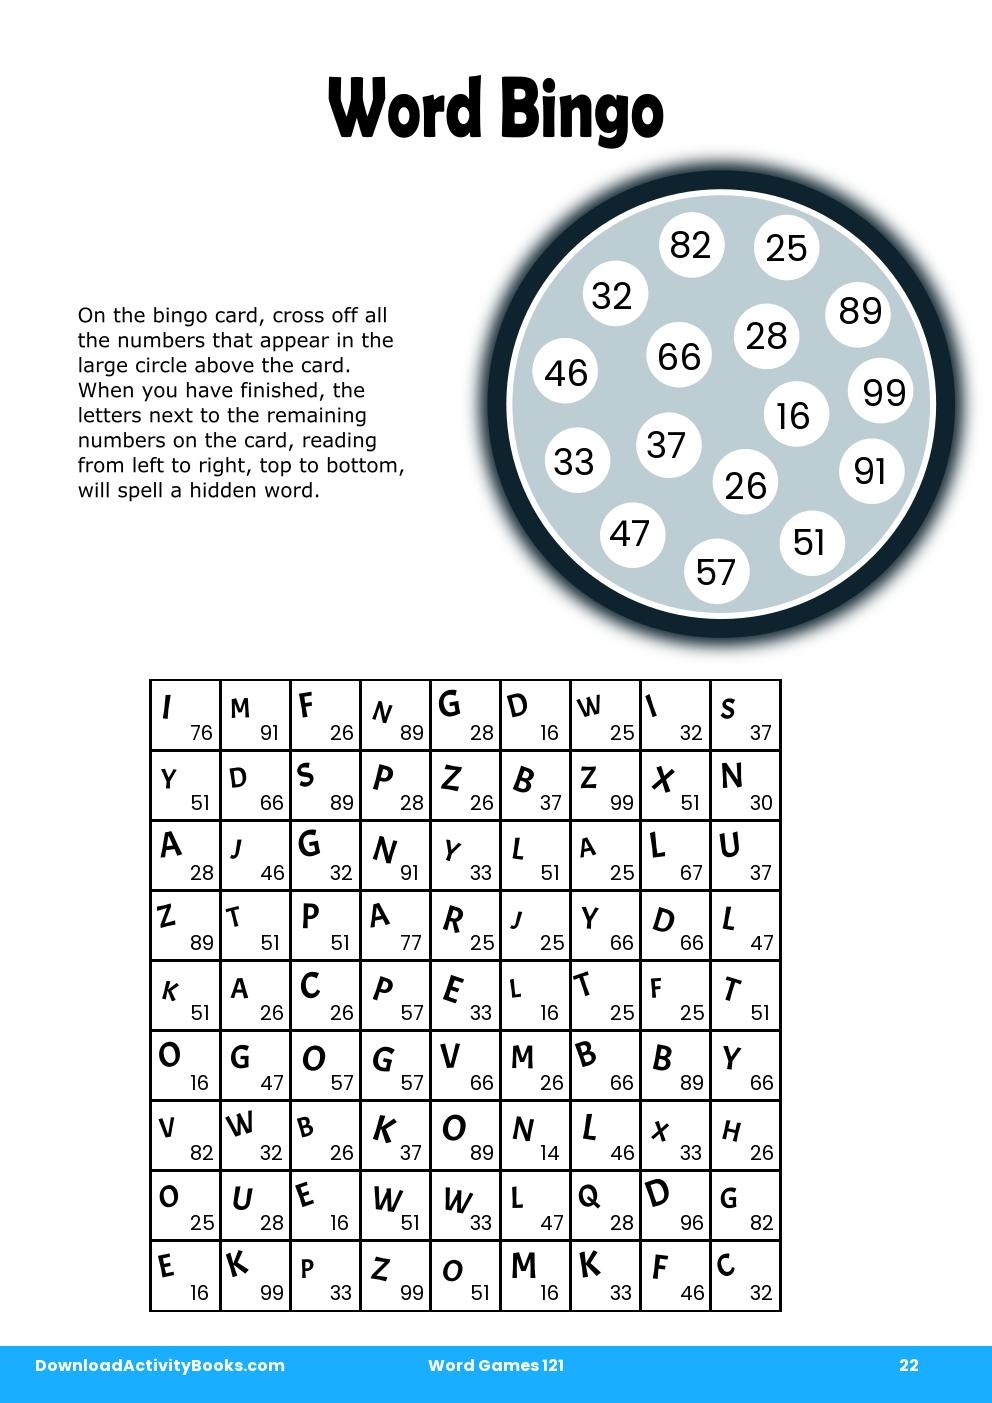 Word Bingo in Word Games 121